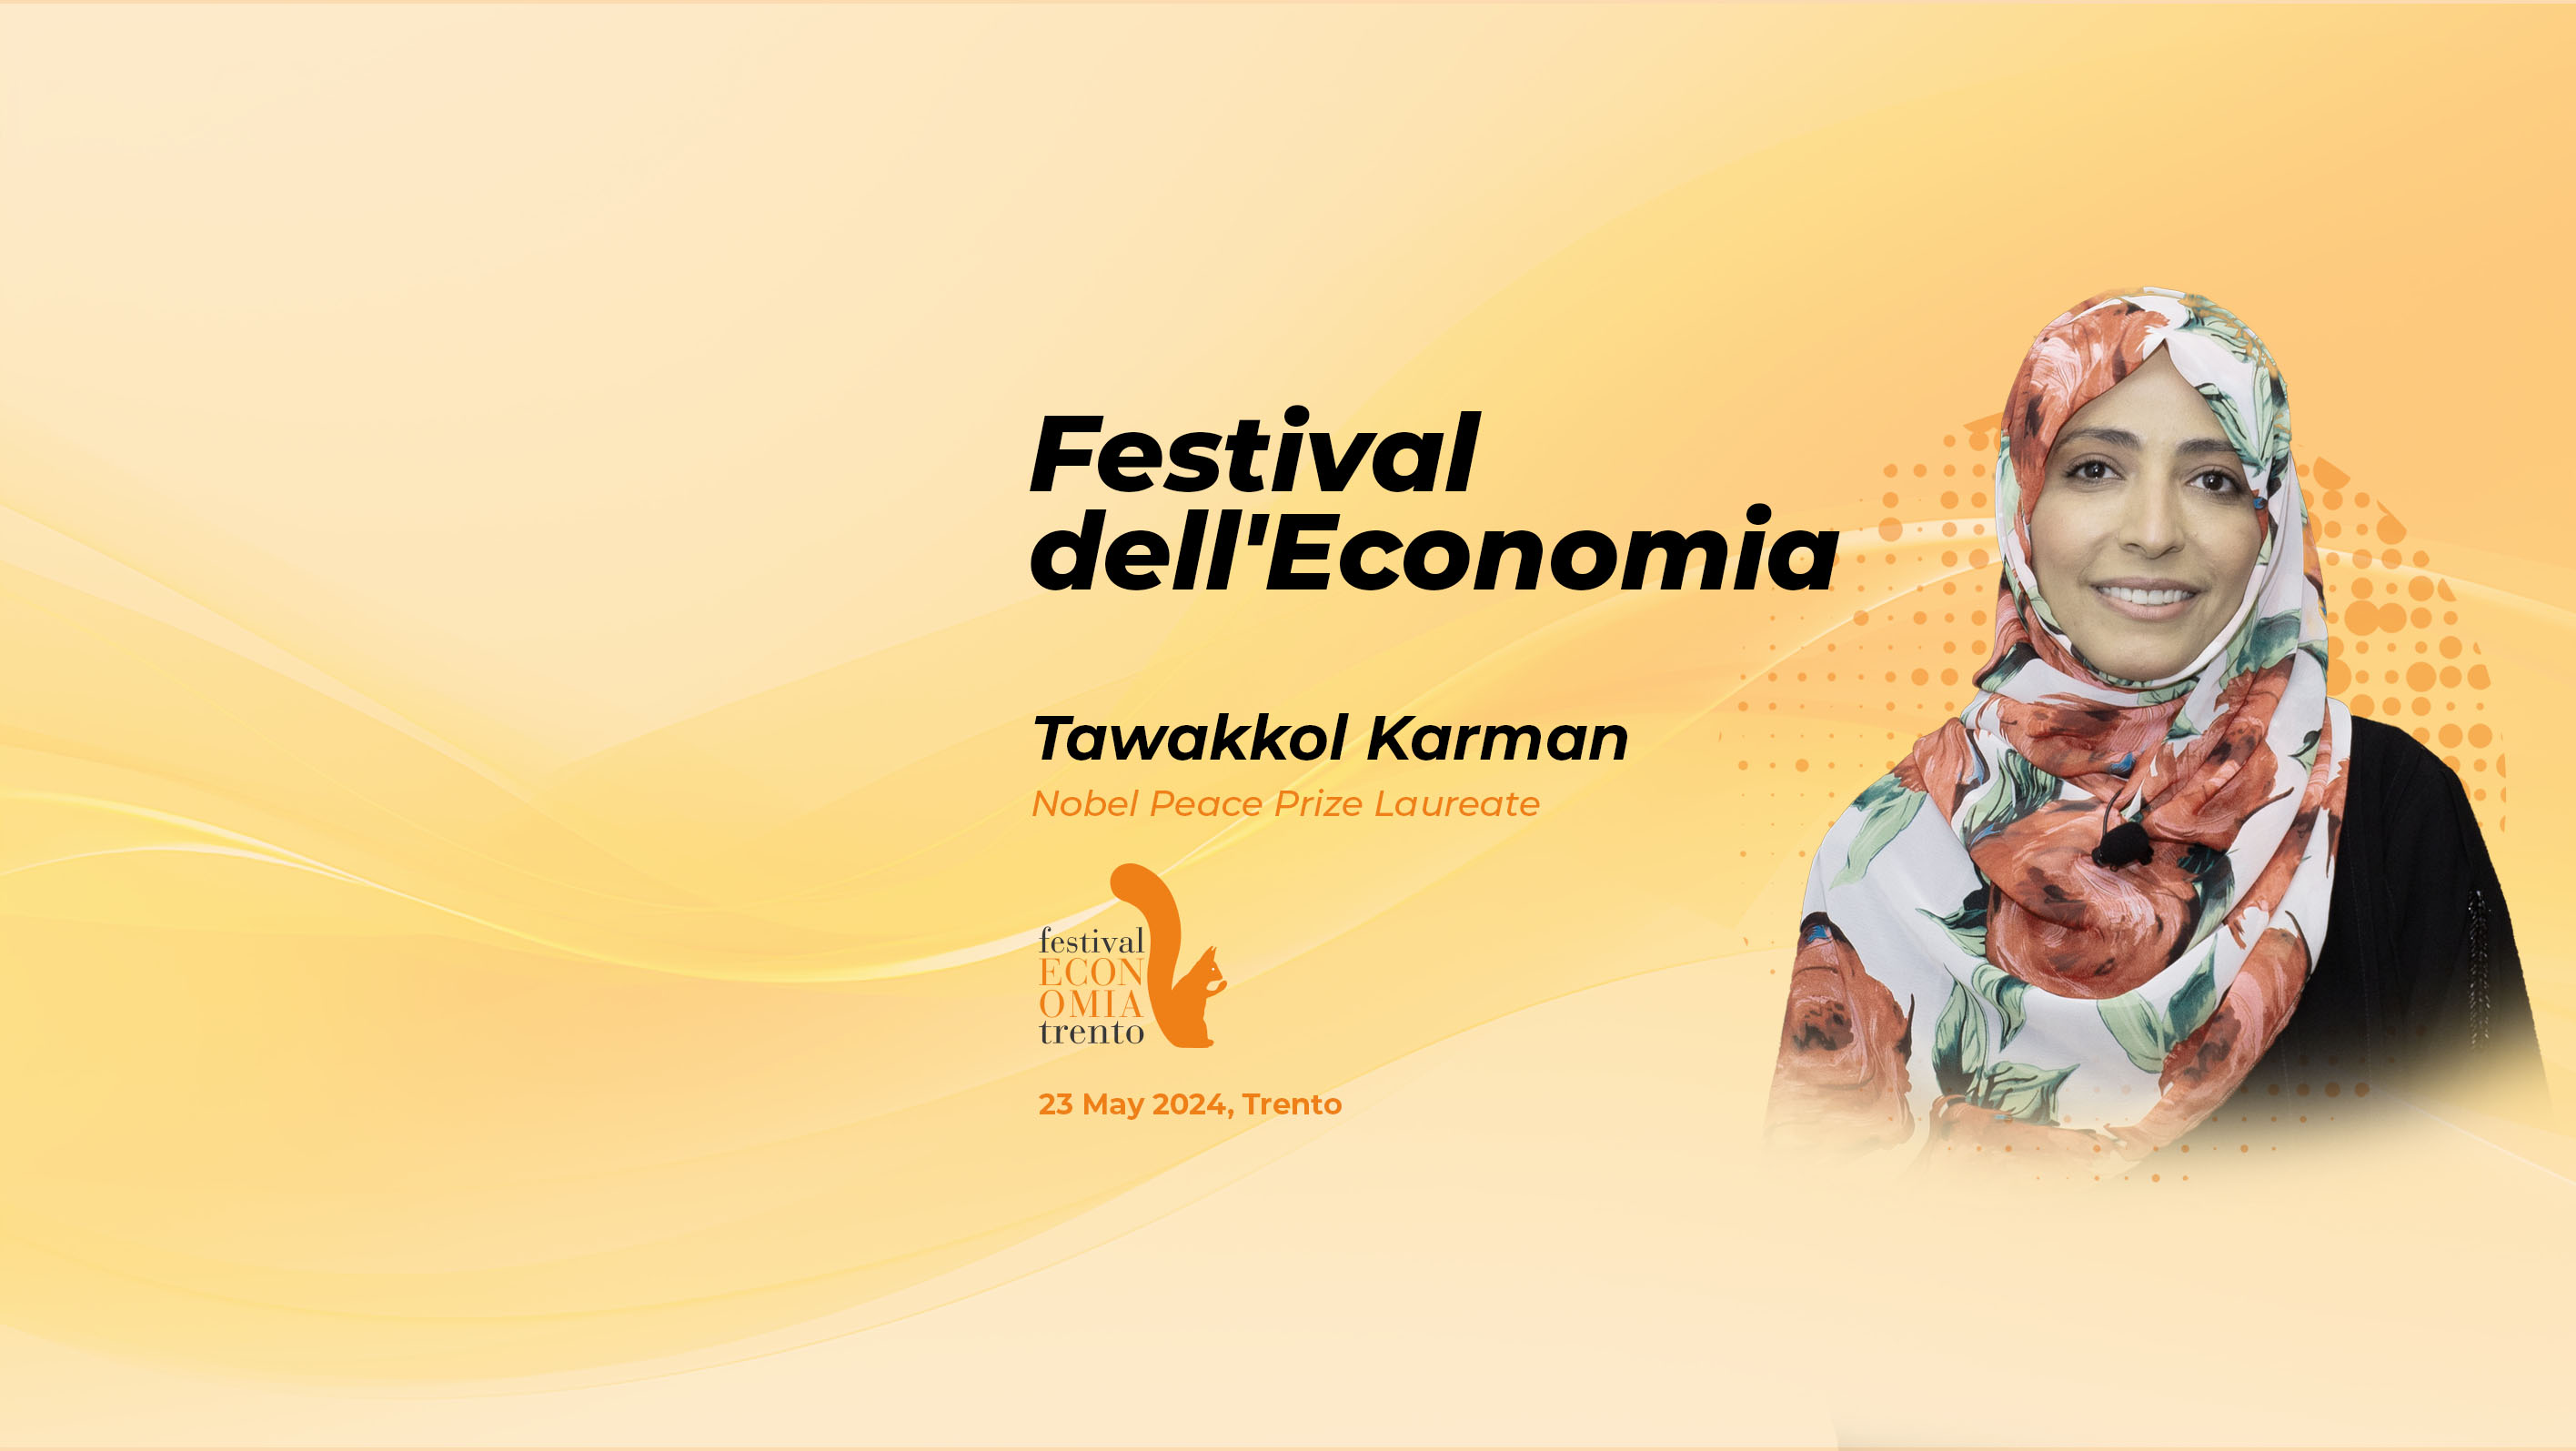 Nobel laureate Tawakkol Karman to speak at Festival dell'Economia 2024 in Trento